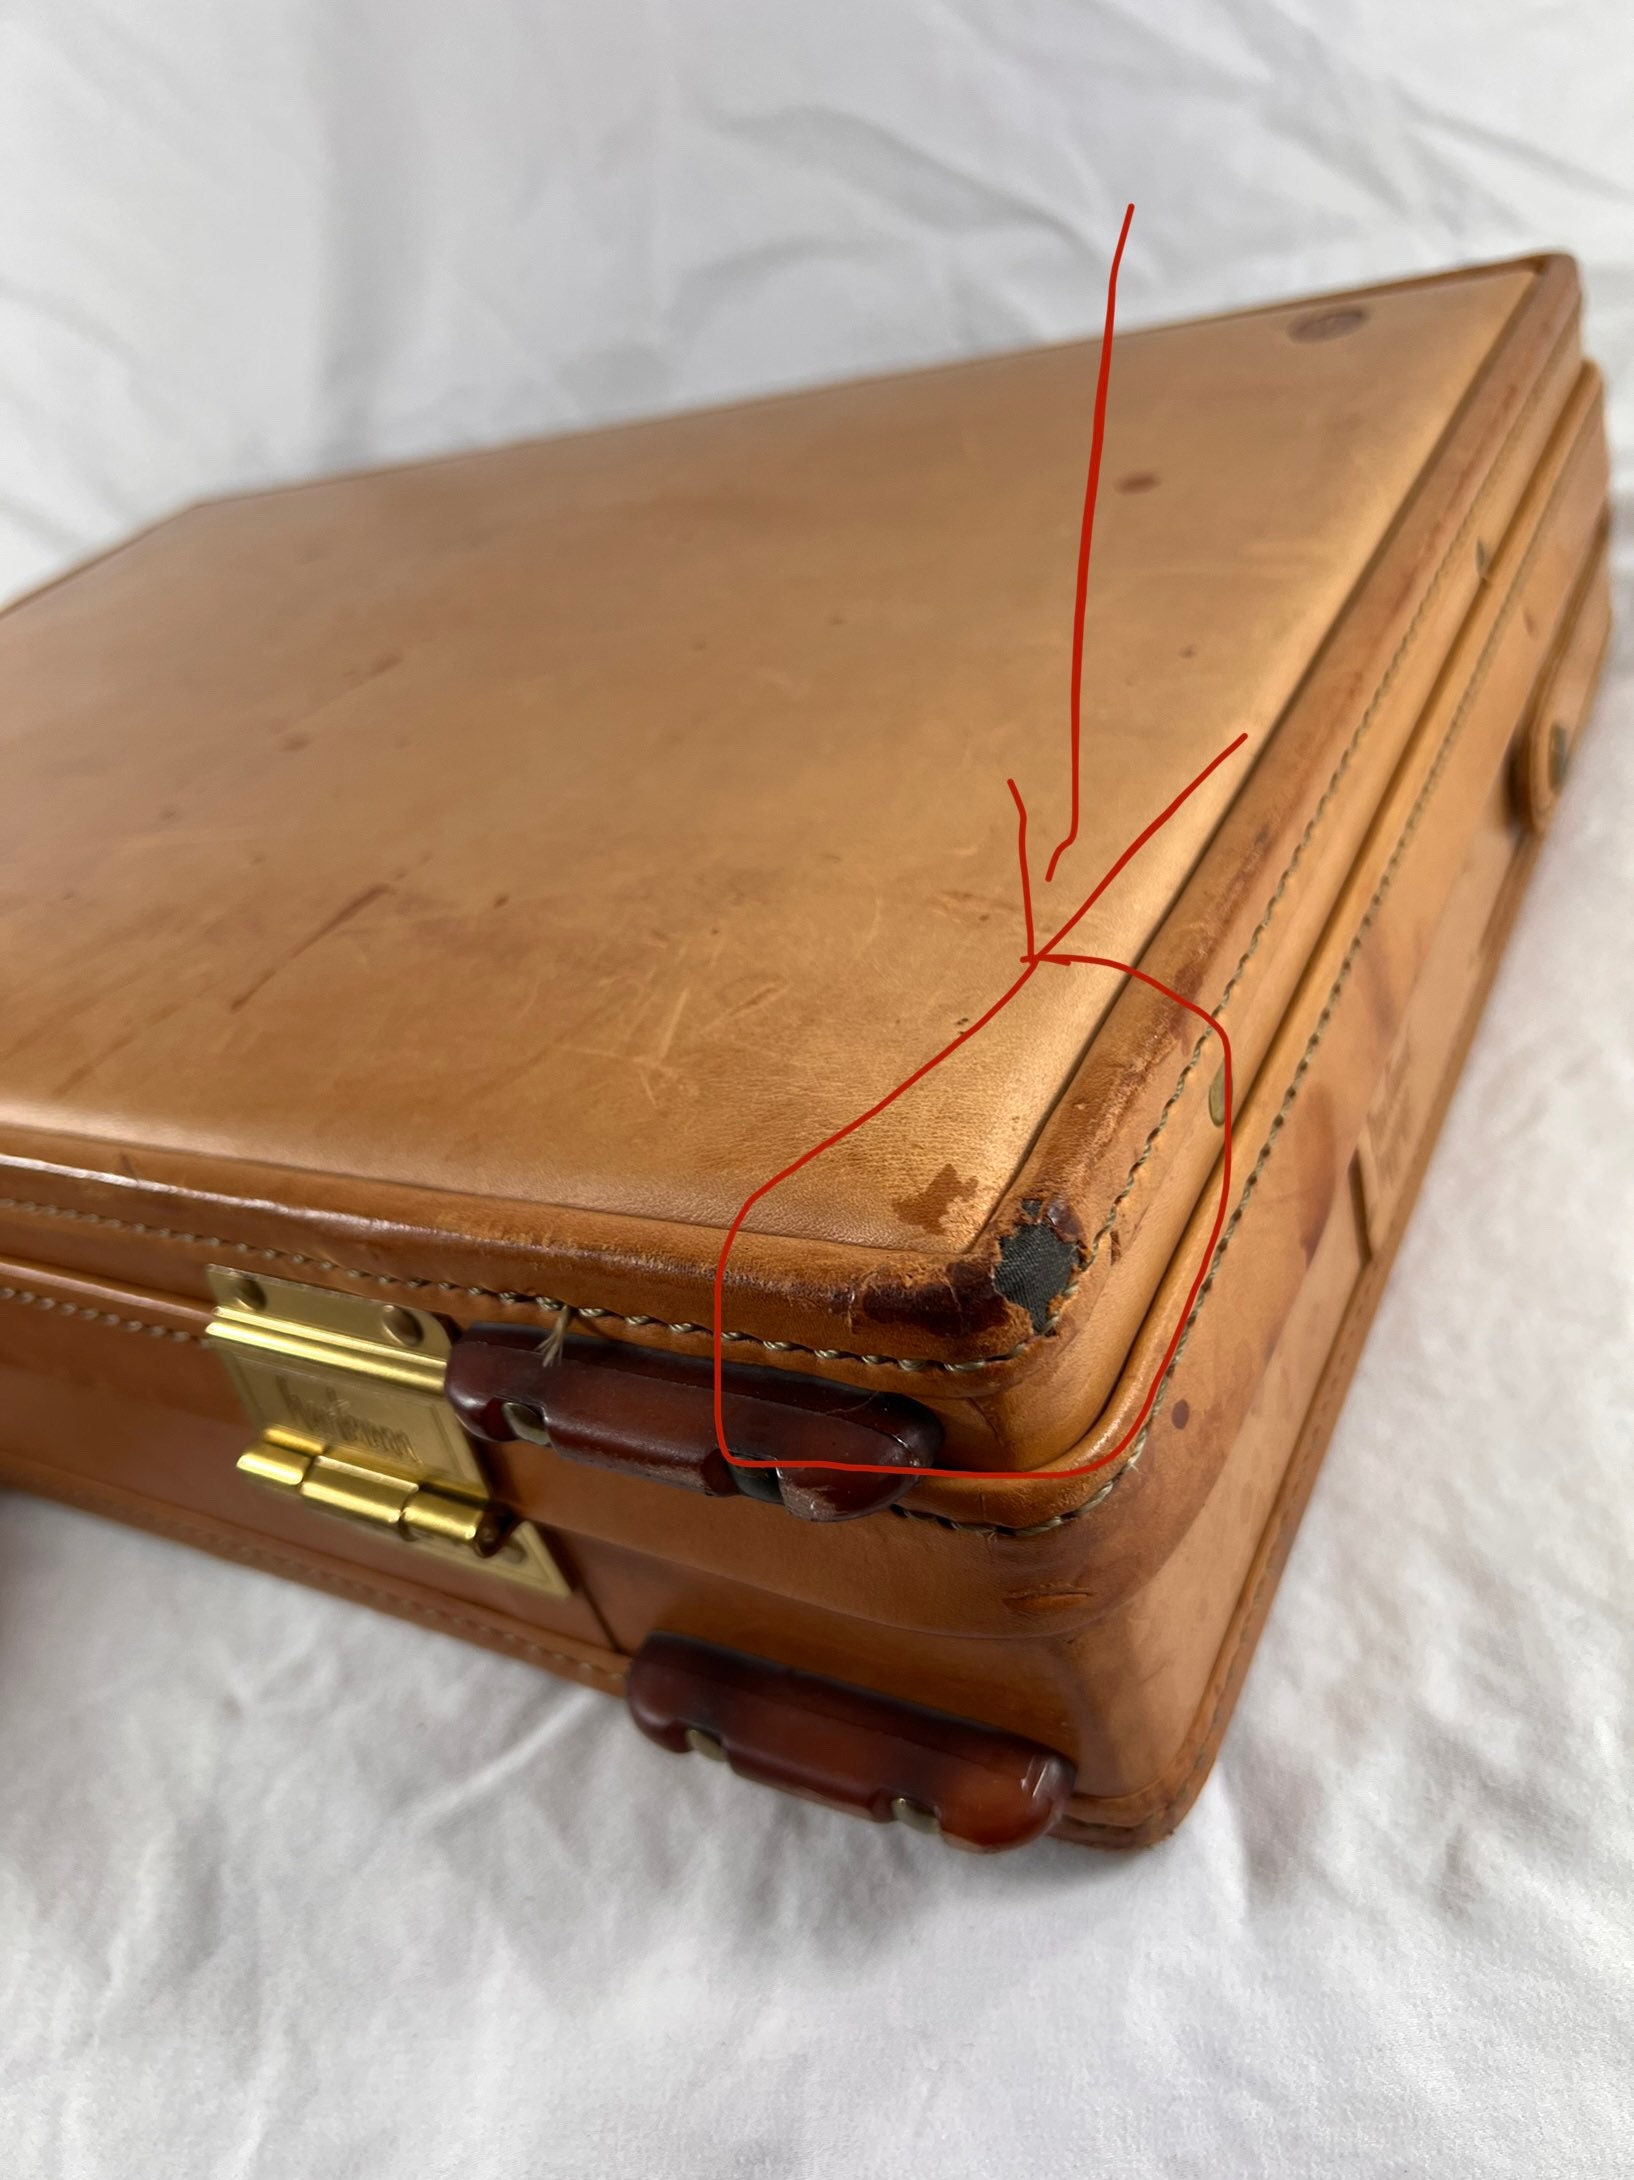 Hartmann Belting Leather Briefcase Messenger Laptop - Rare Fold Over F –  Olde Kitchen & Home